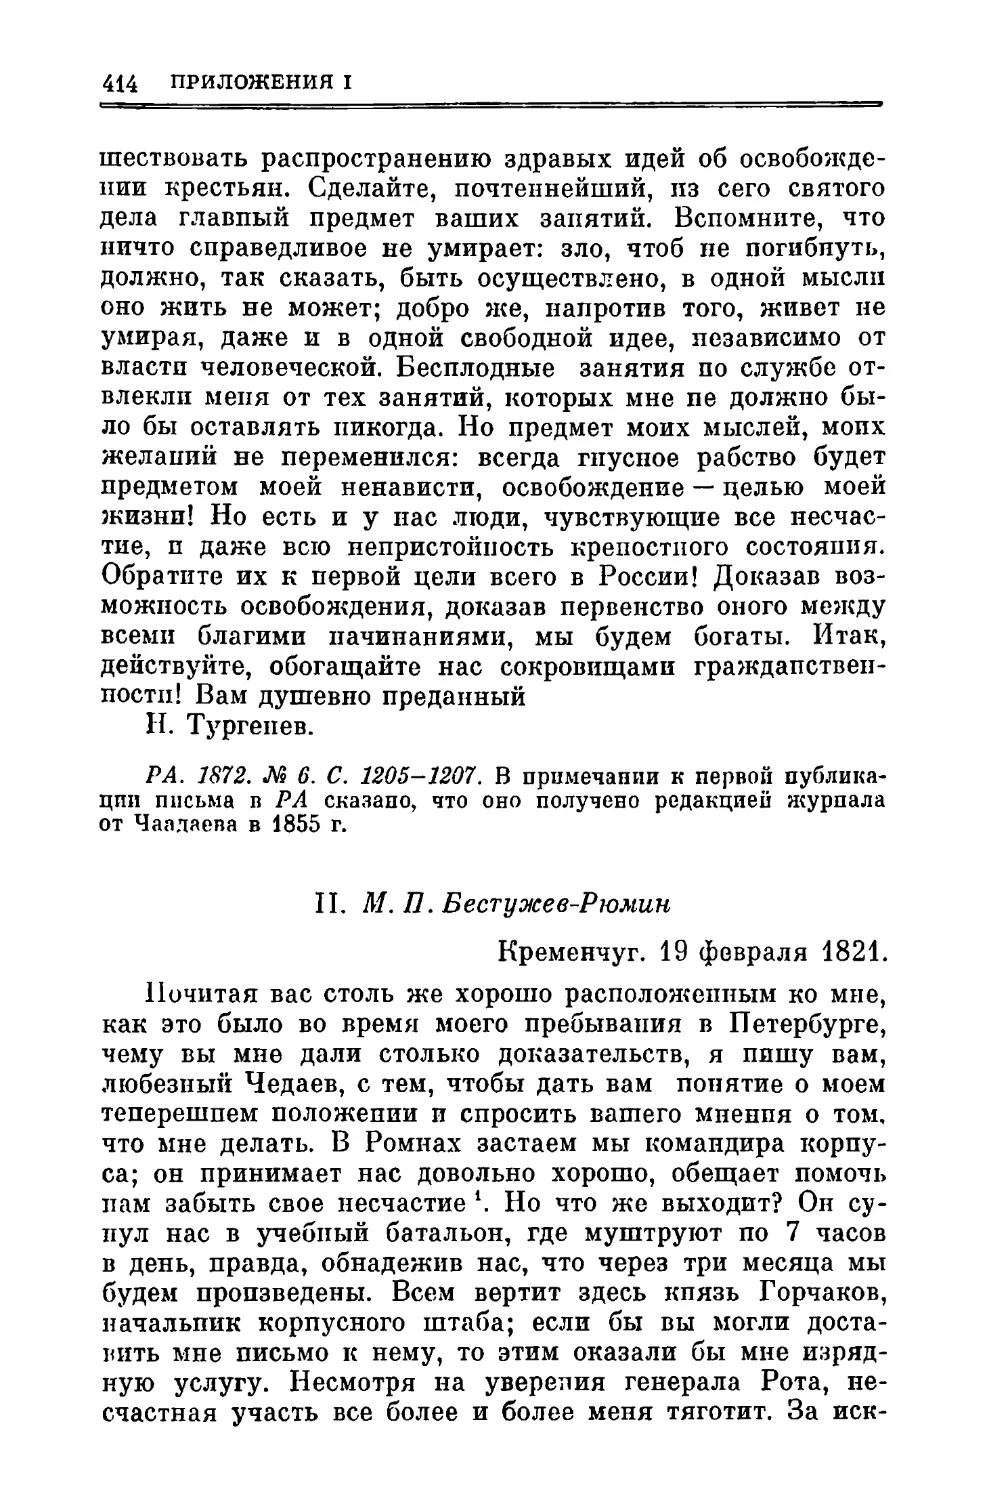 II. Бестужев-Рюмин М.П. 19.11.1821